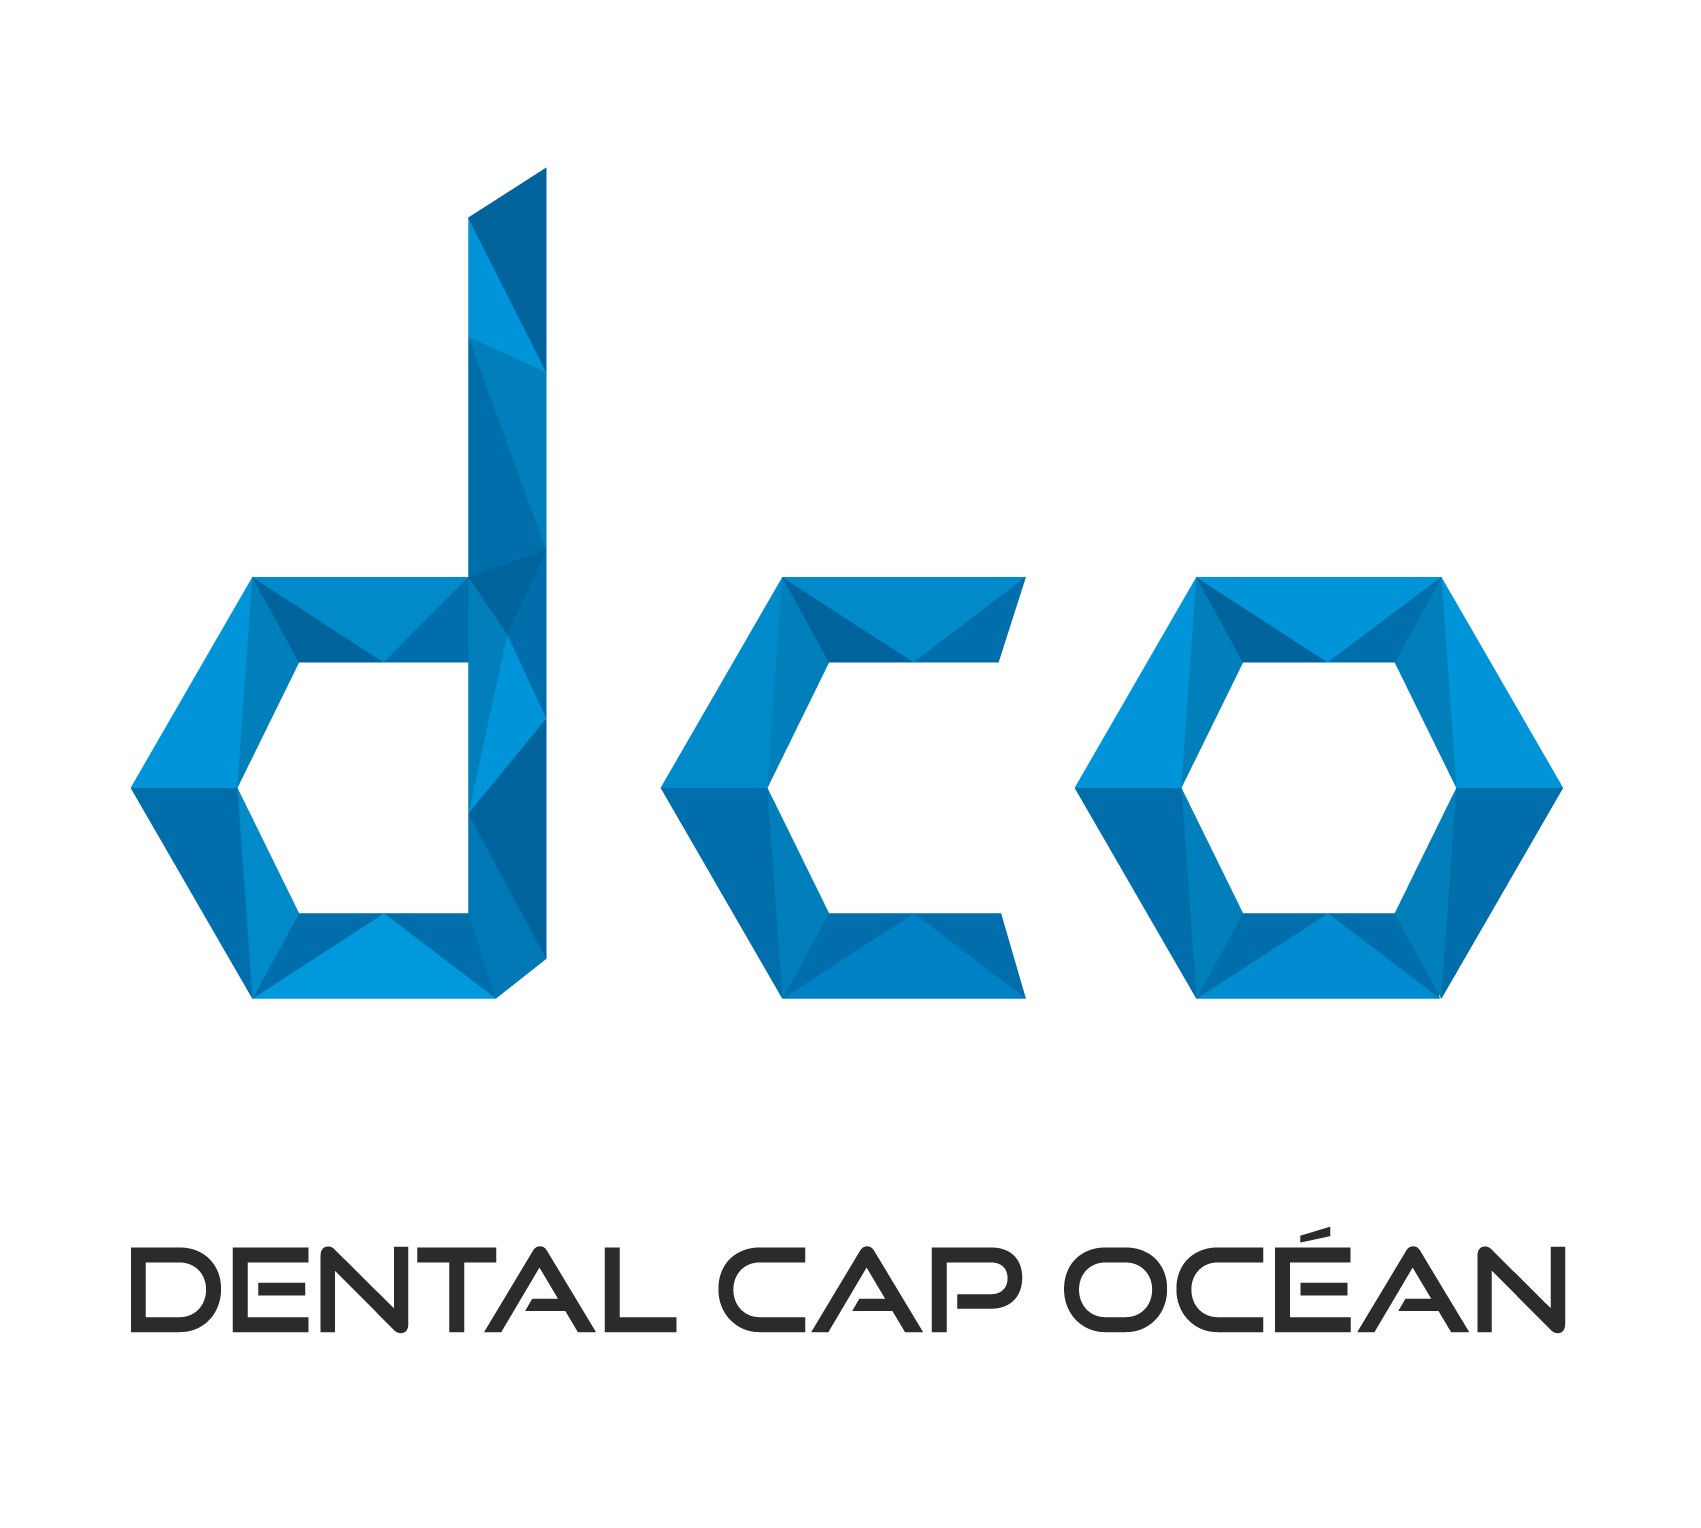 id86 - Dental Cap Ocean logo_anonymous.jpg